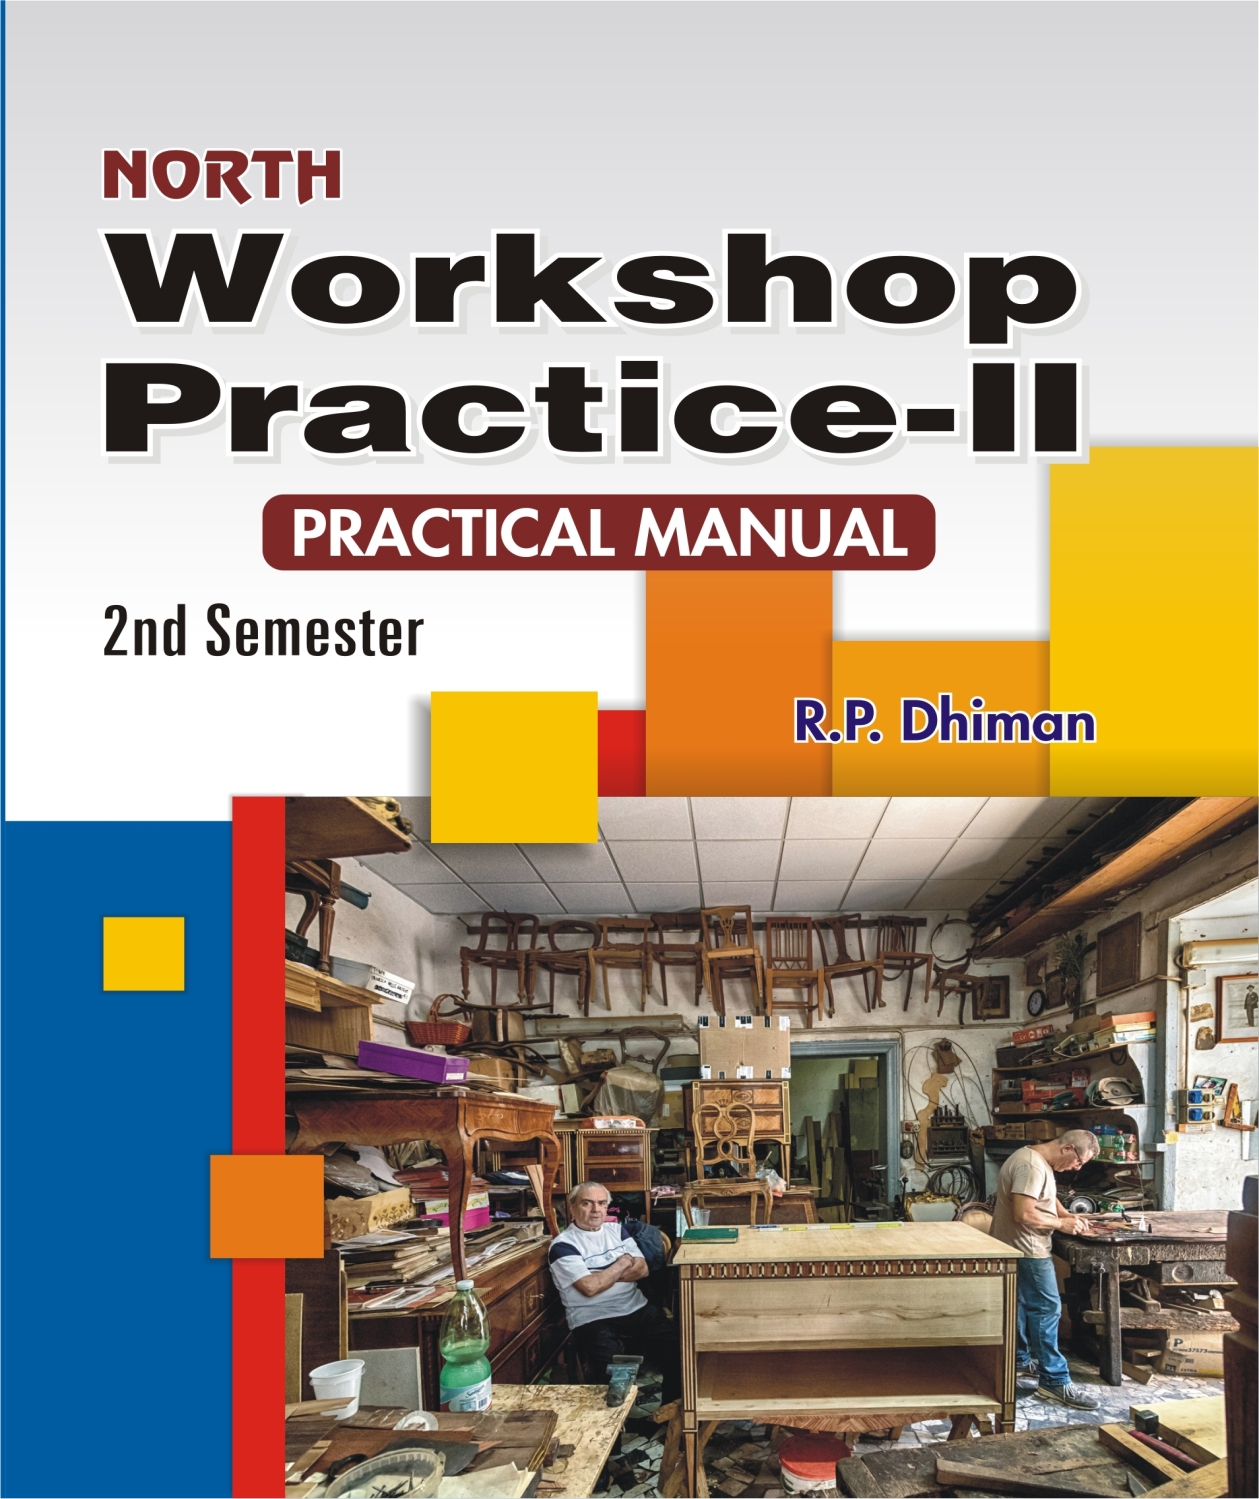 Workshop Practice-II

Practical manual